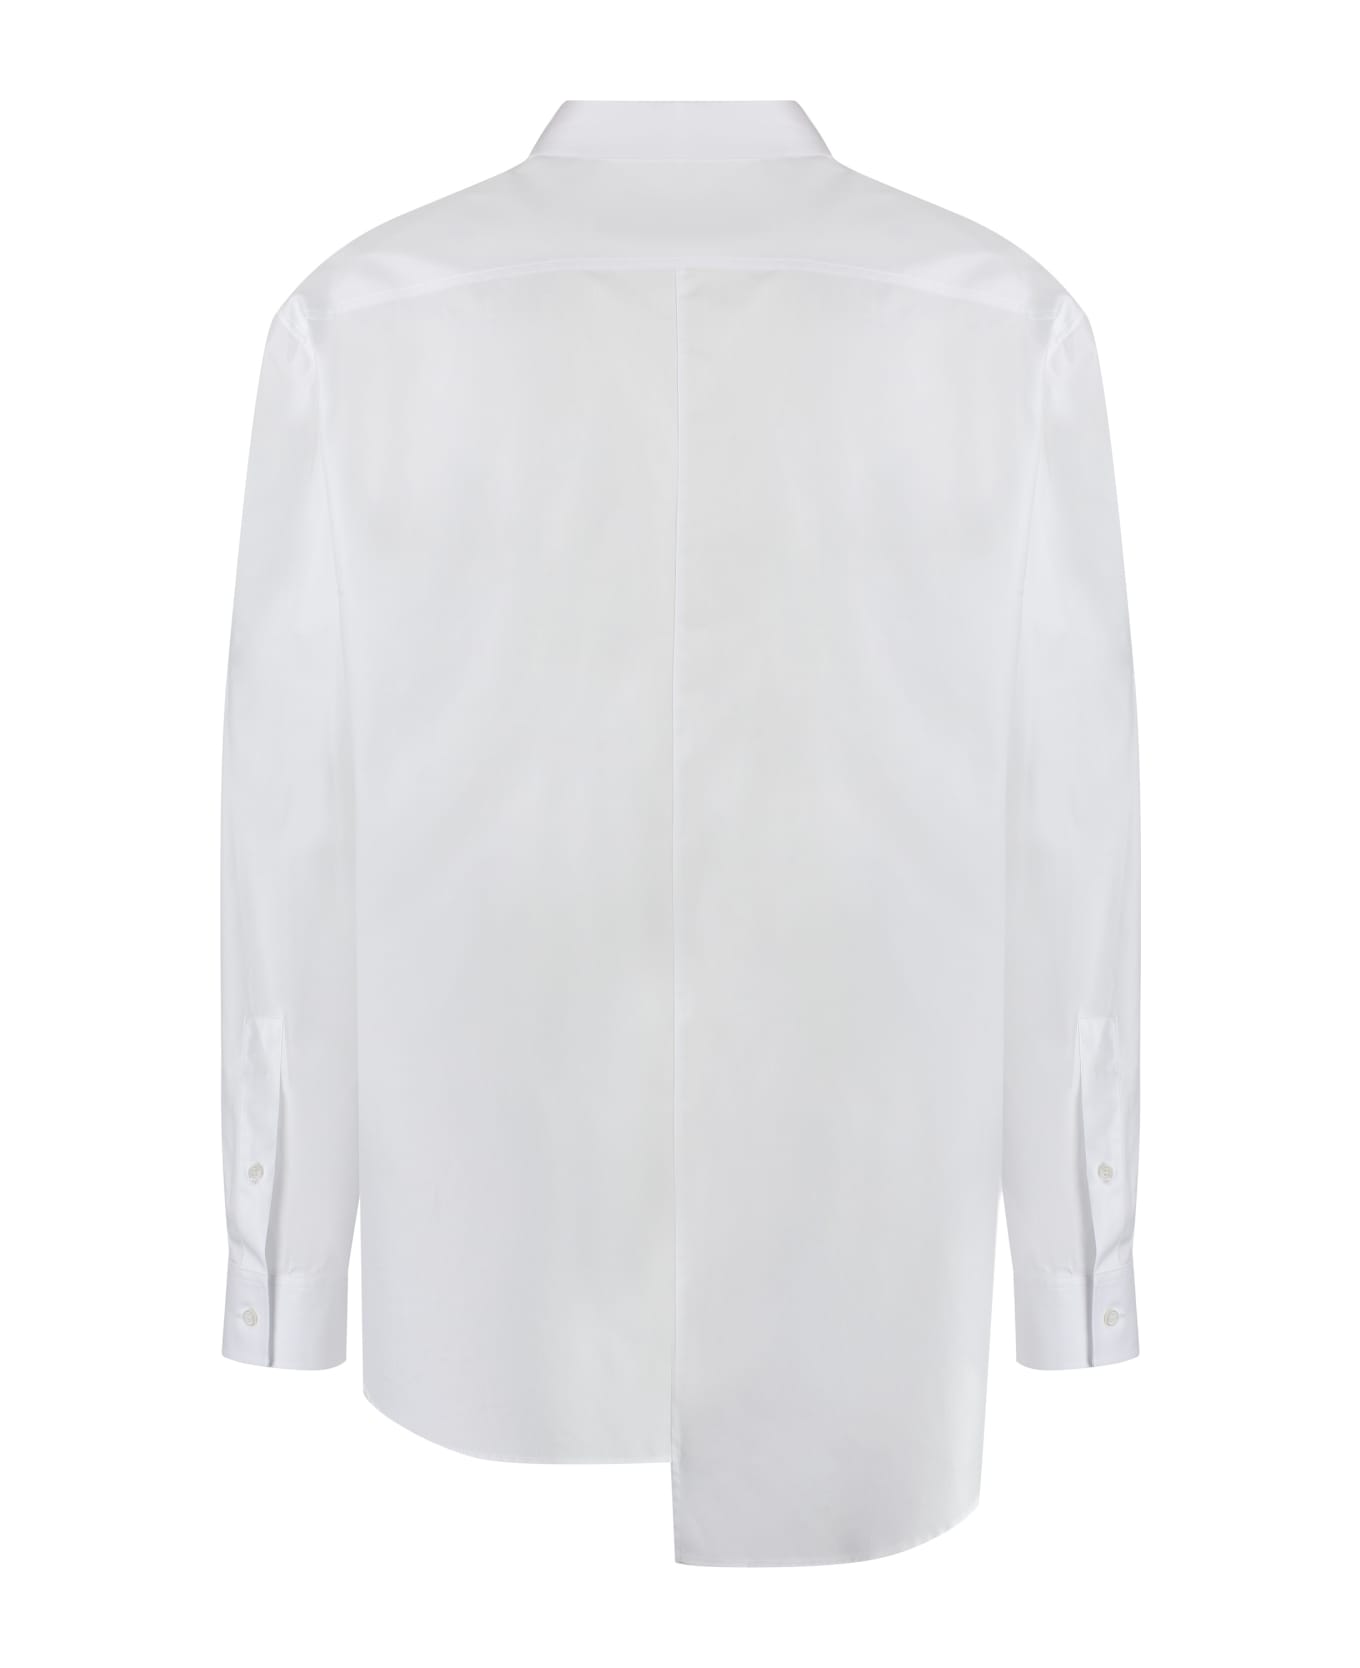 Loewe Cotton Shirt - White